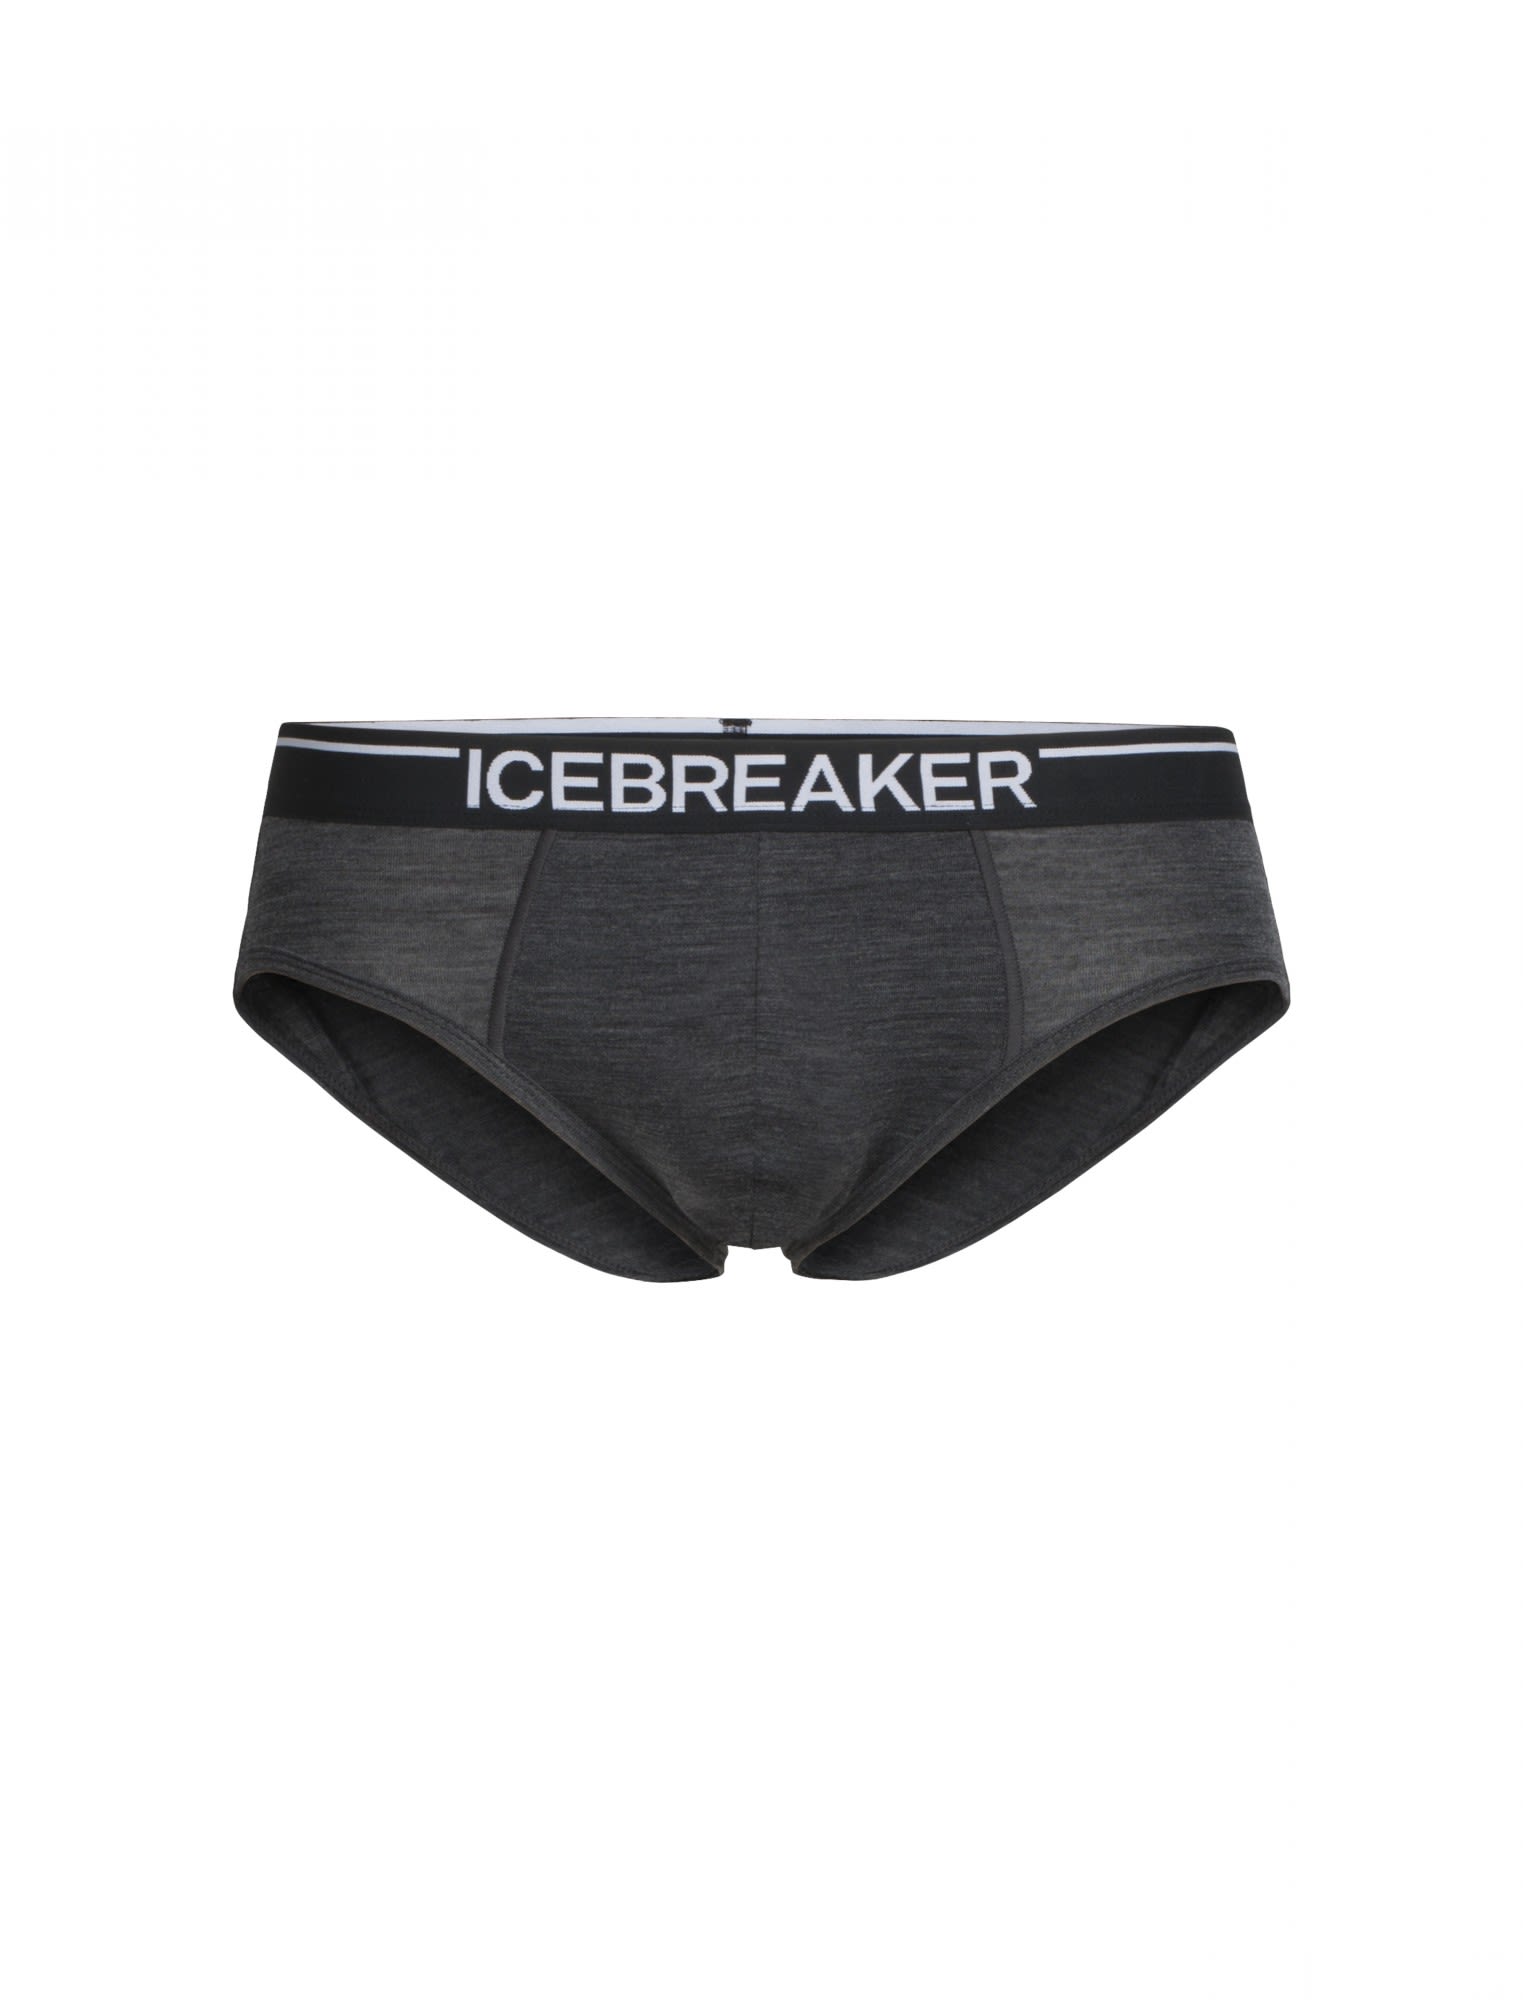 Icebreaker M Anatomica Briefs Grau | Herren Kurze Unterhose